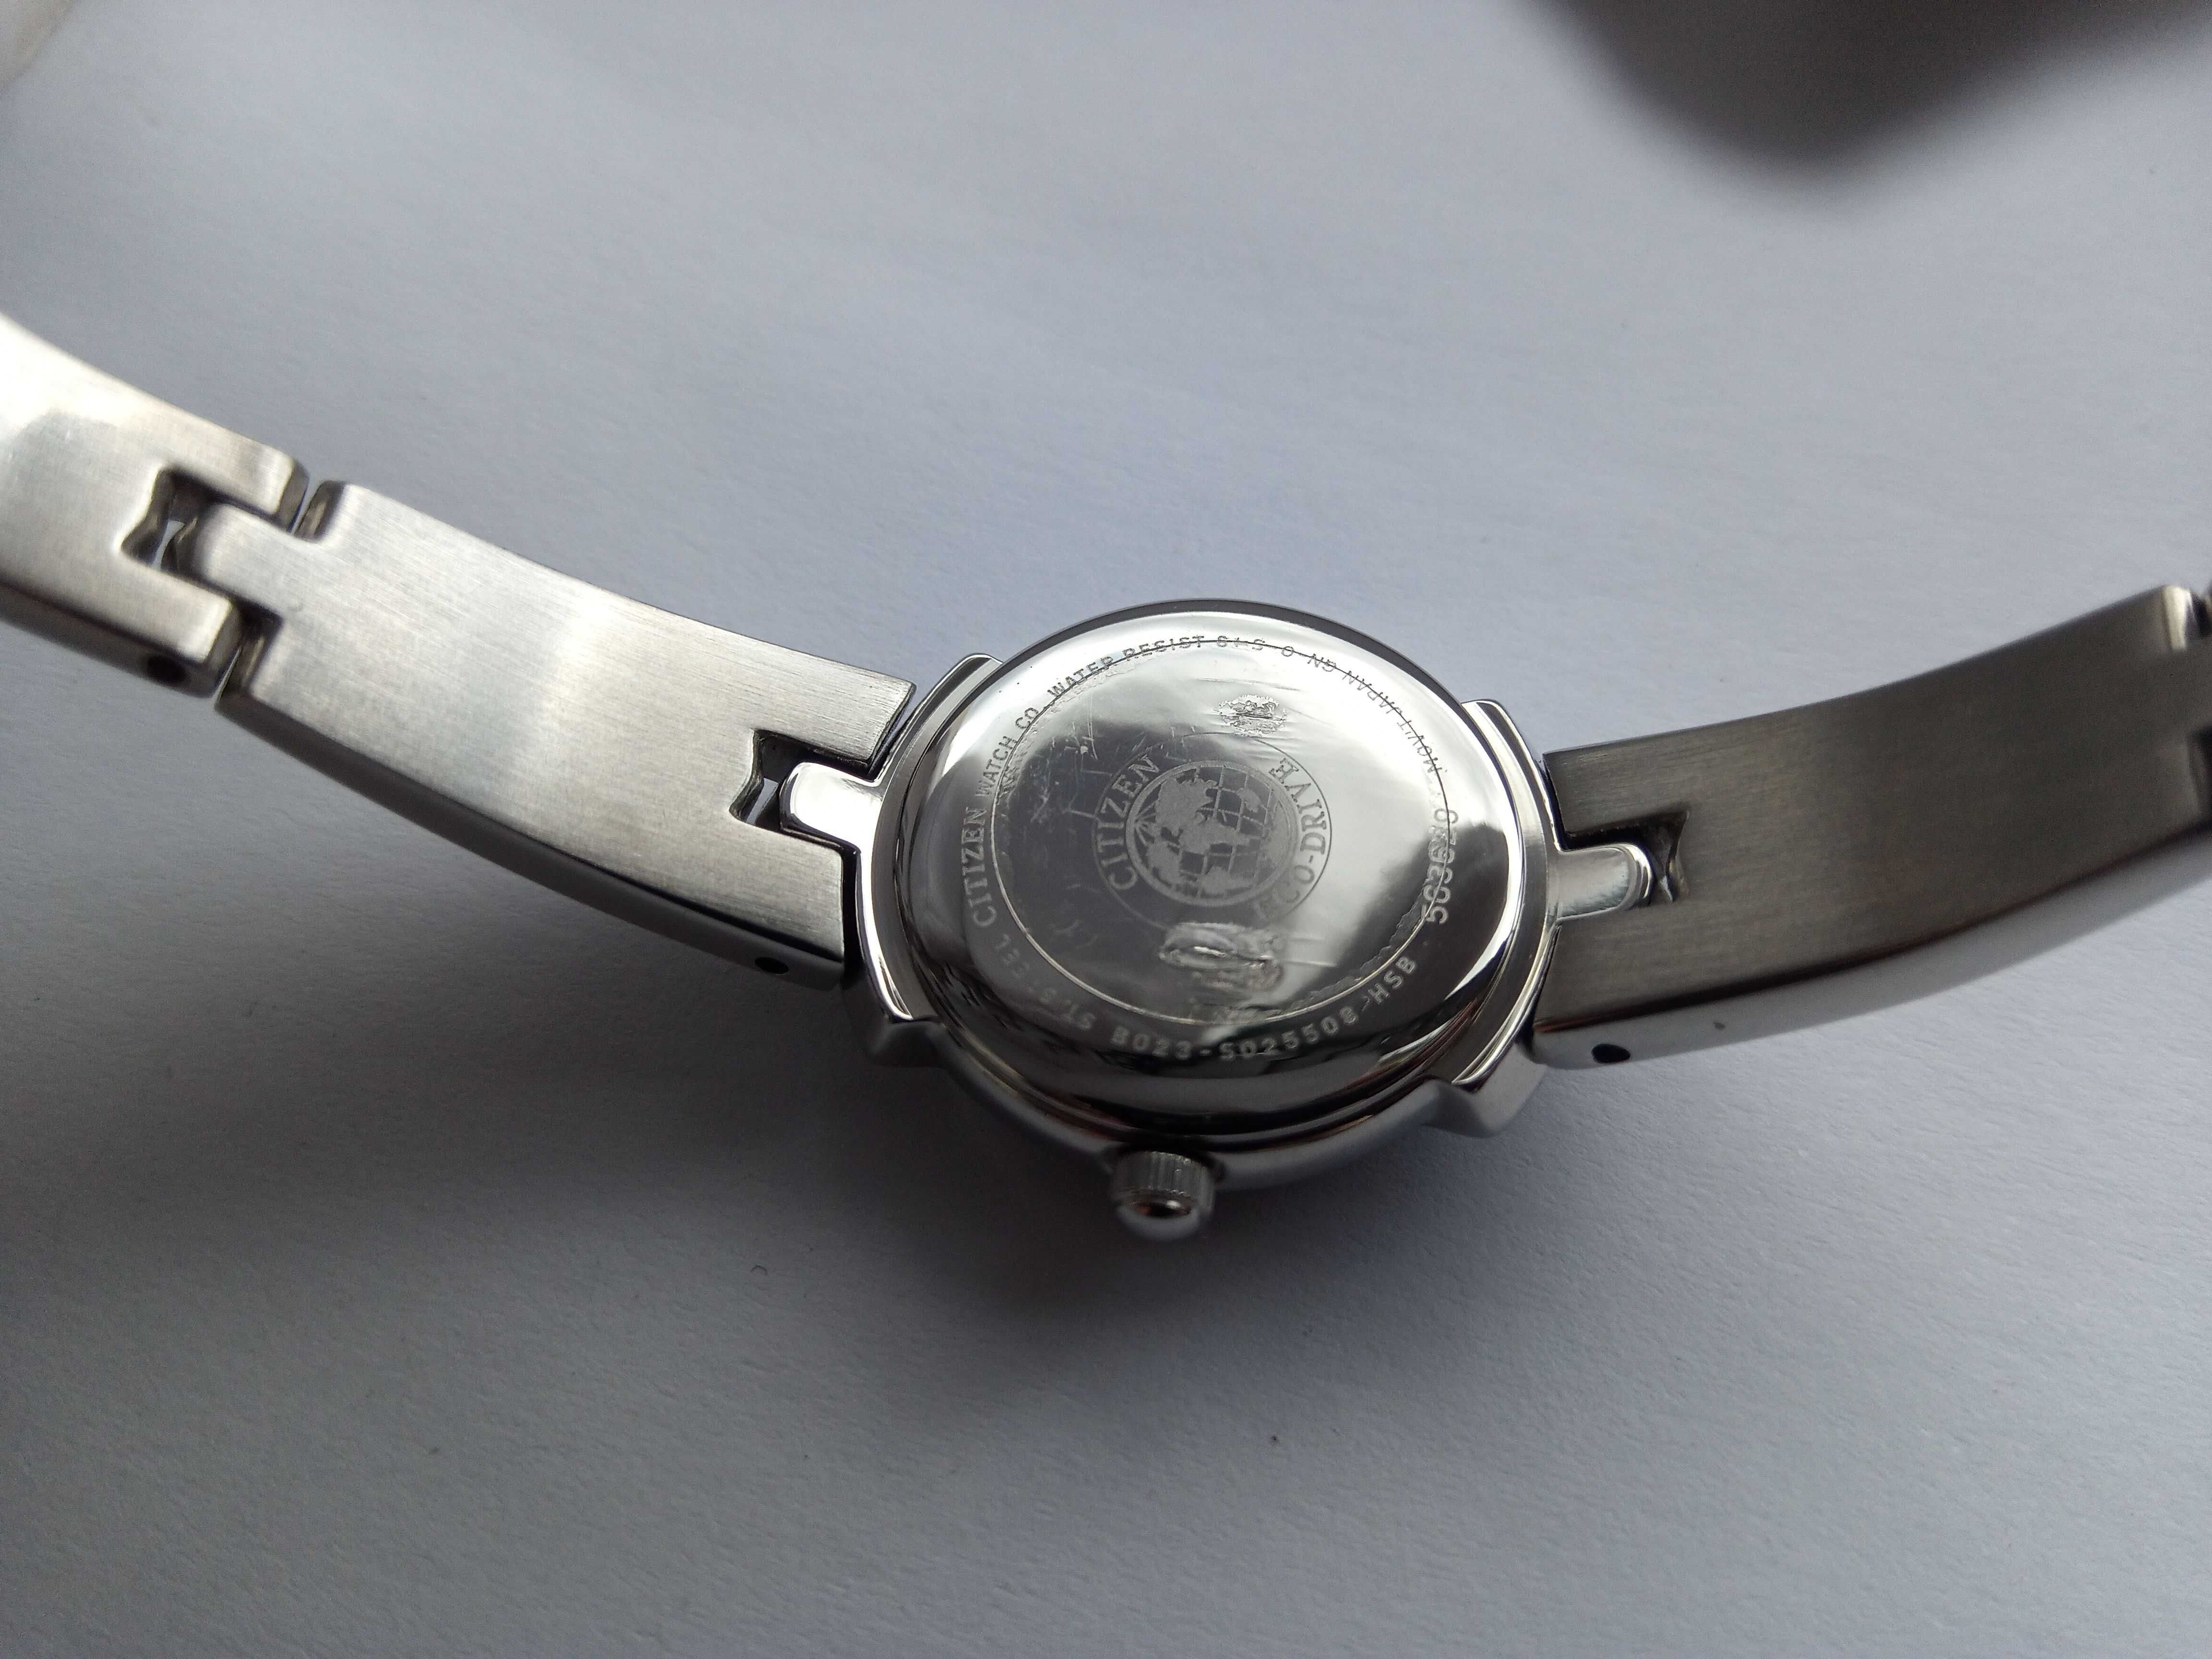 Японские женские часы Citizen Eco-Drive EW9010-54E Swarovski, РРЦ $225